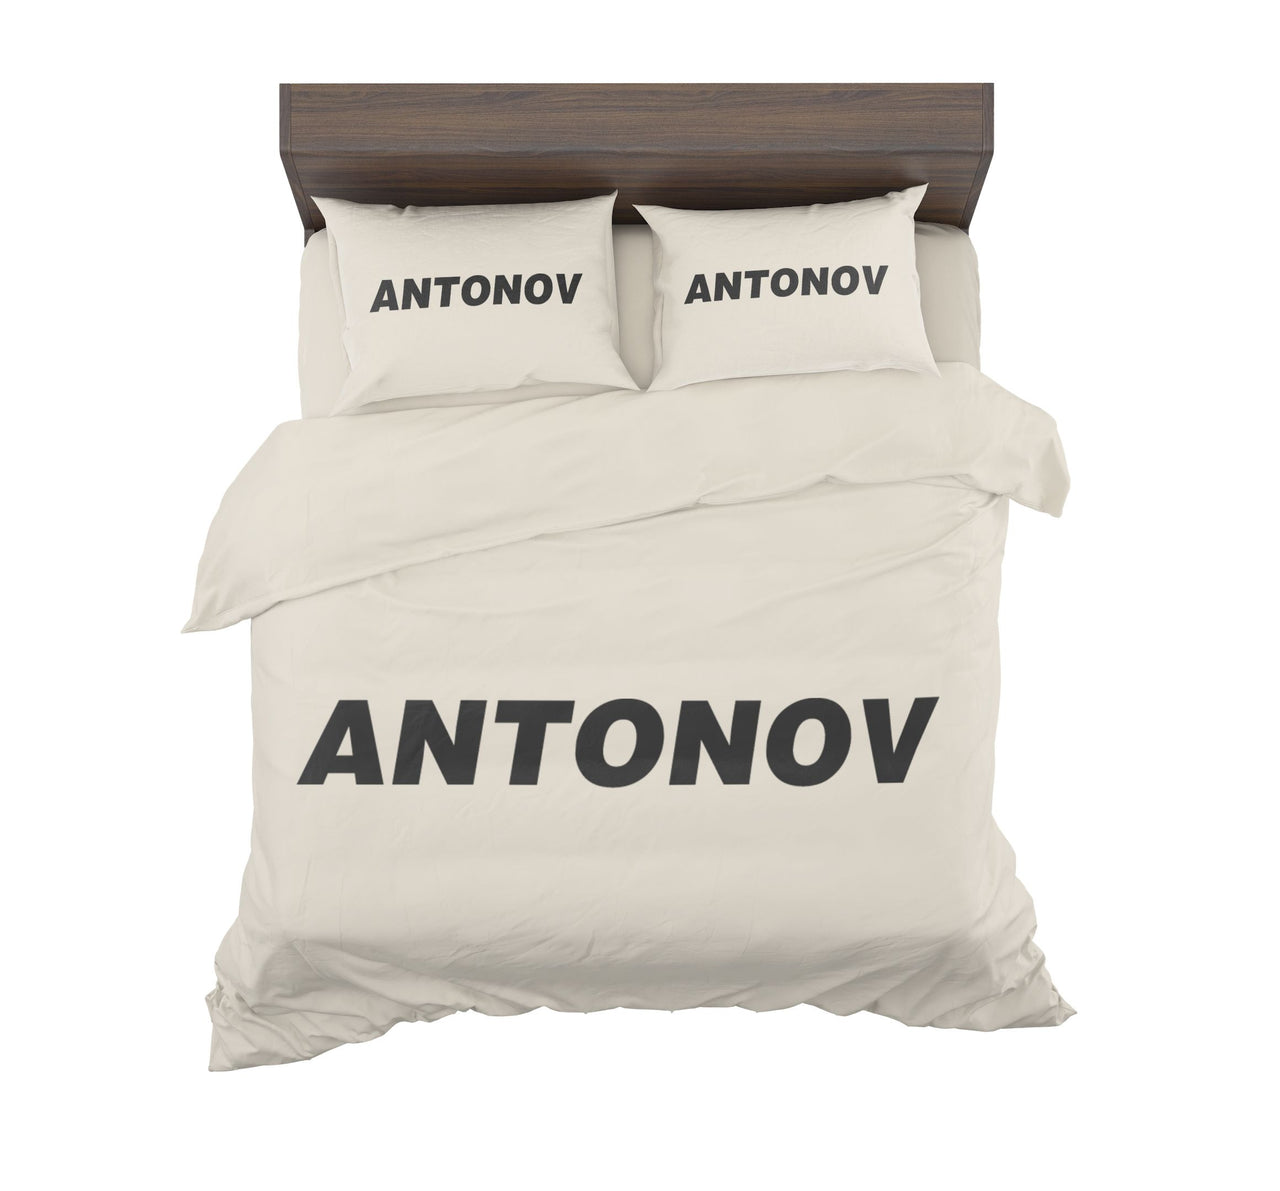 Antonov & Text Designed Bedding Sets